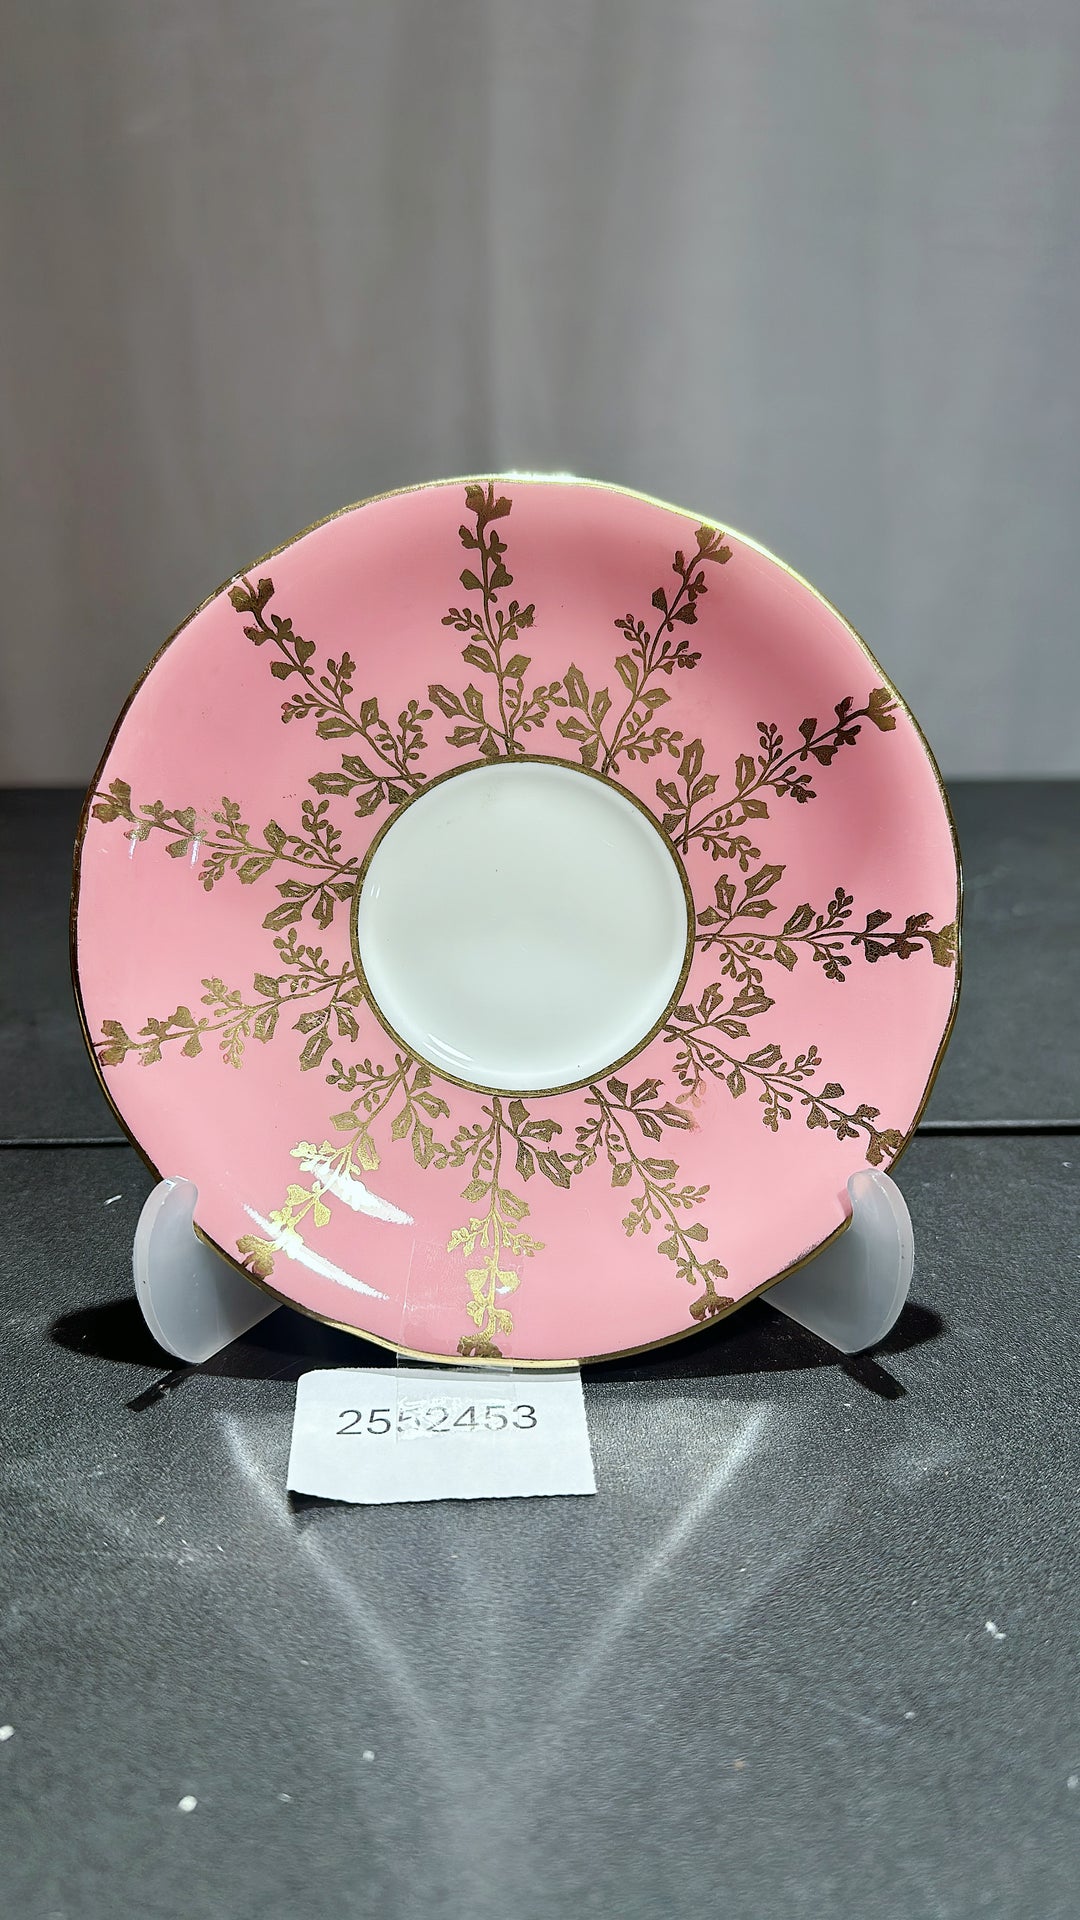 Antique Plate 2552453